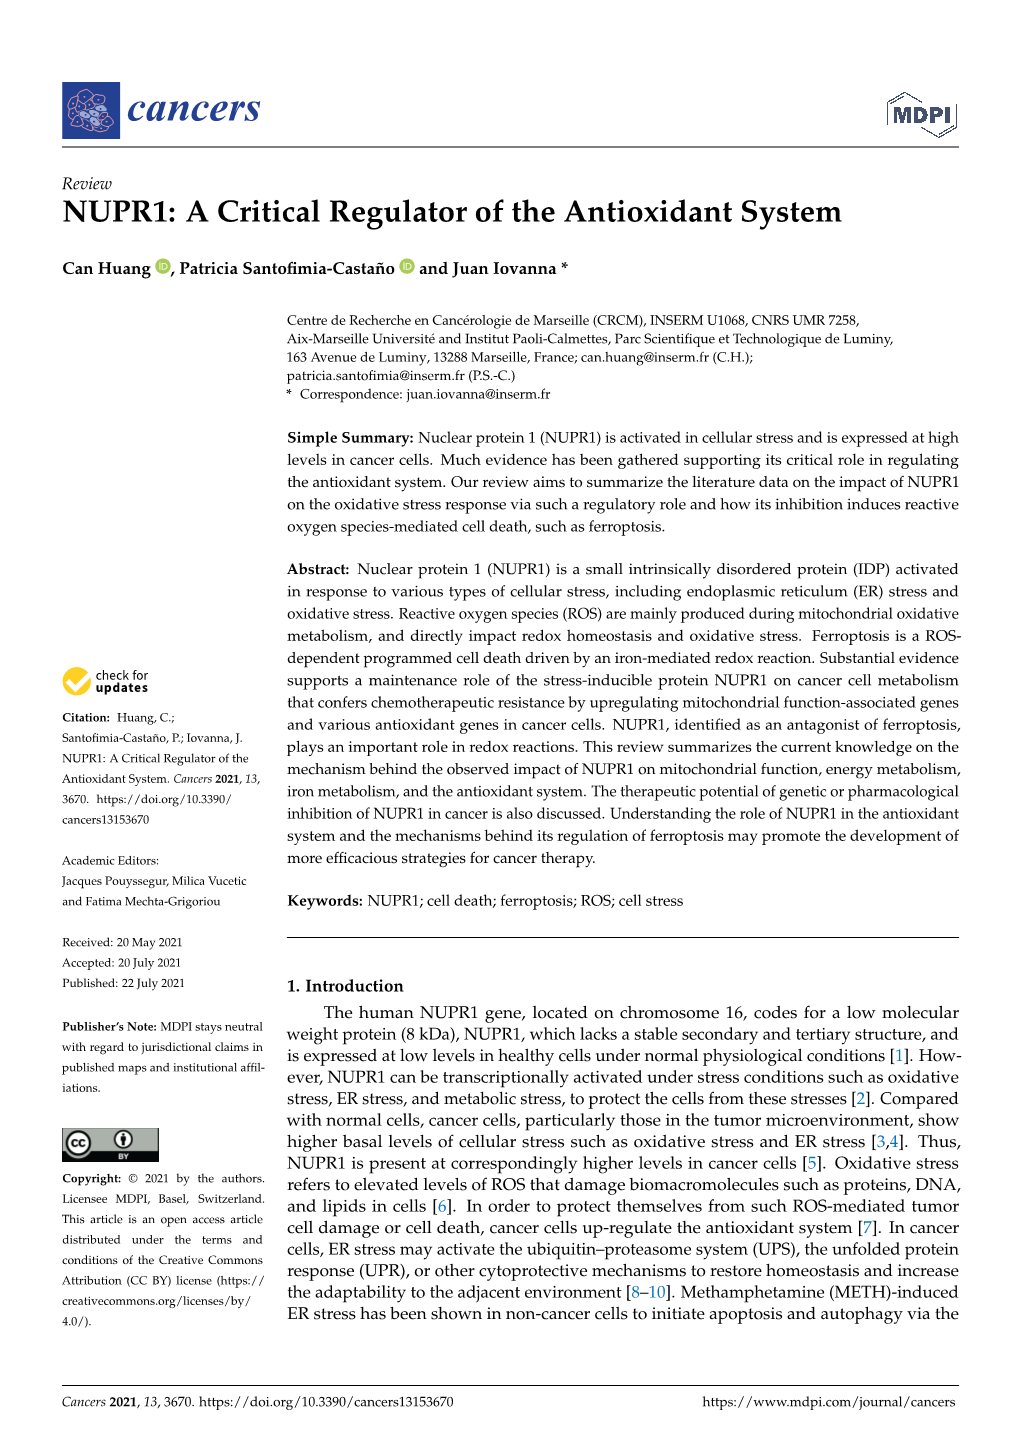 NUPR1: a Critical Regulator of the Antioxidant System